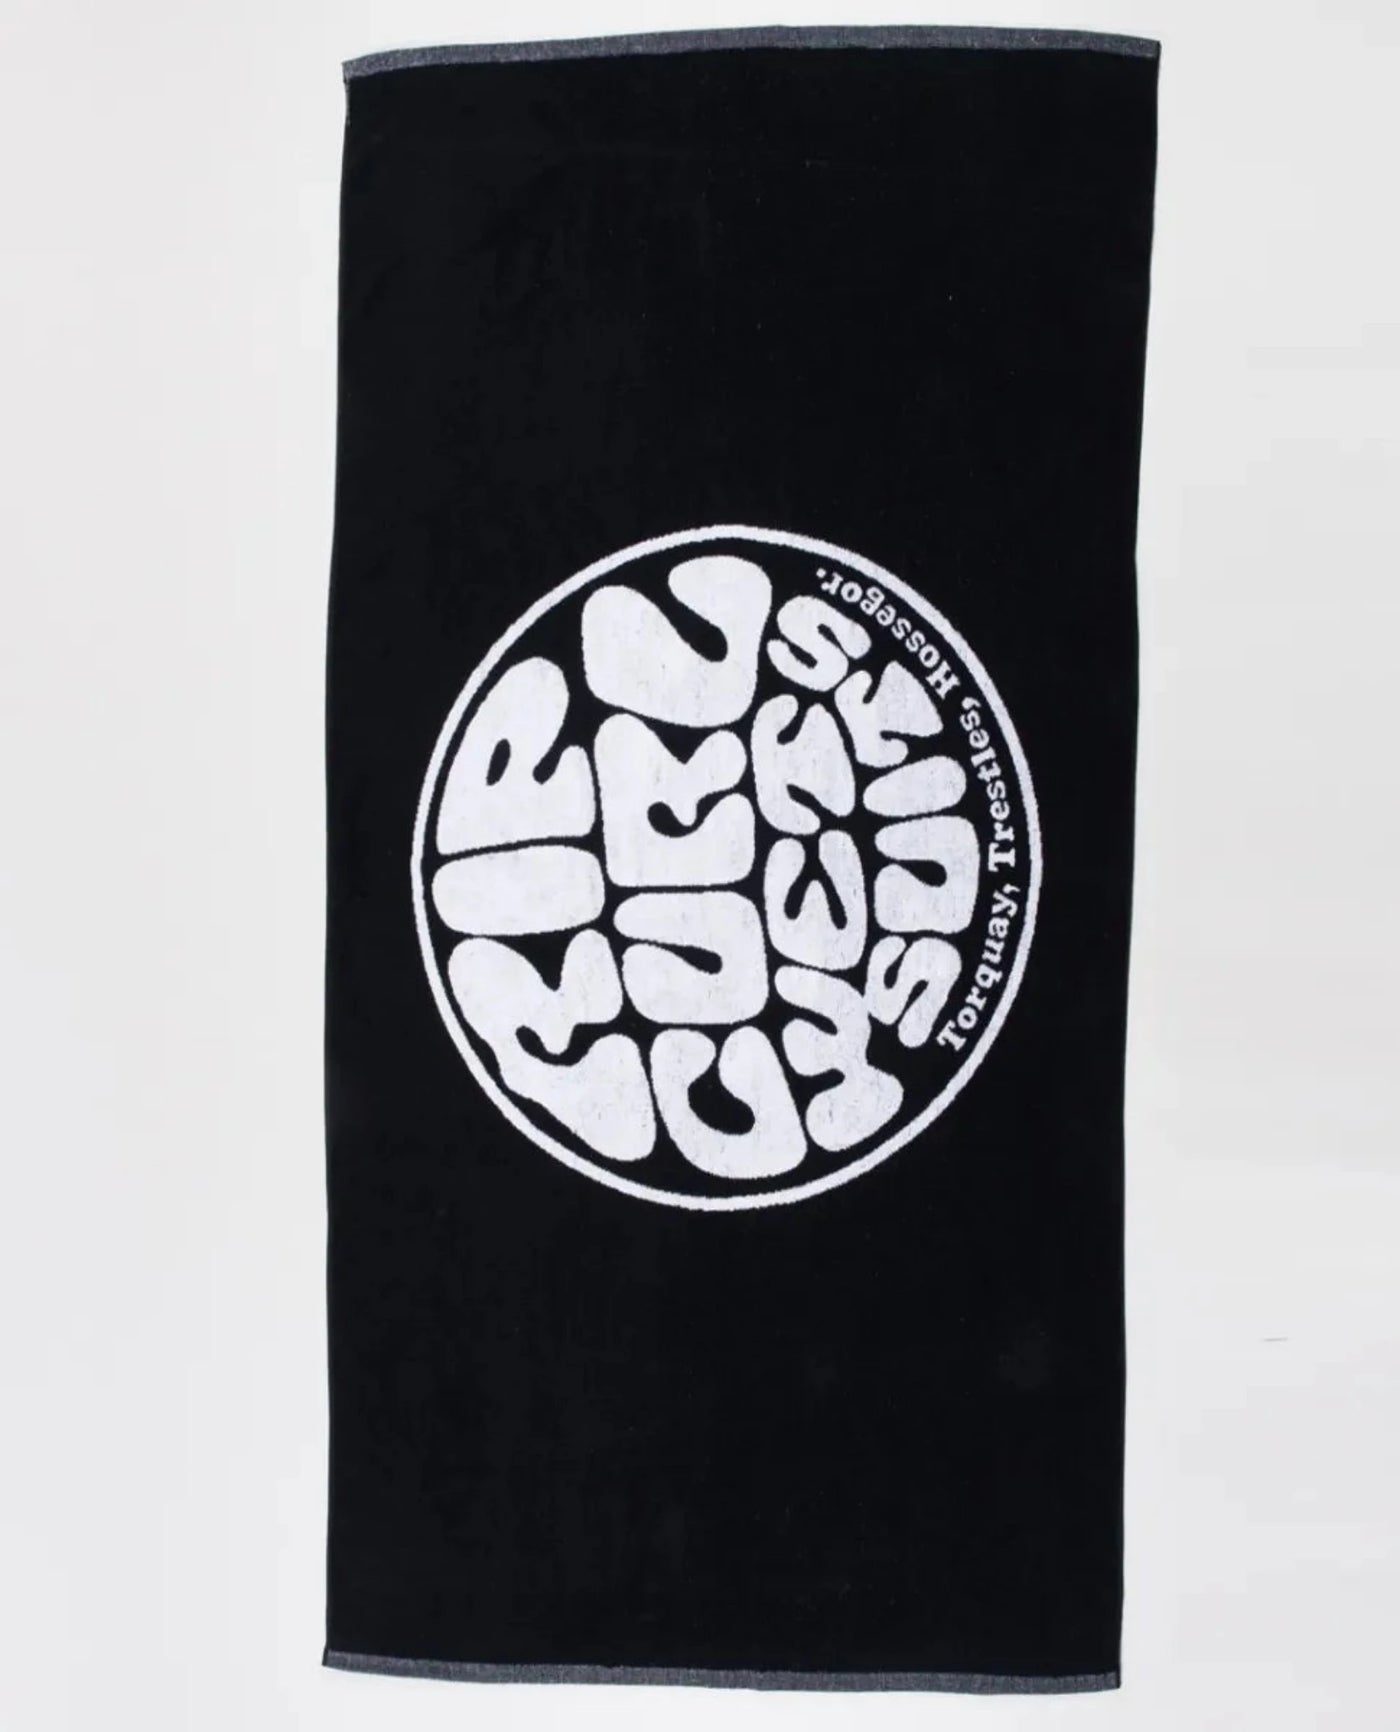 Rip Curl Wetty Icon Towel - Black